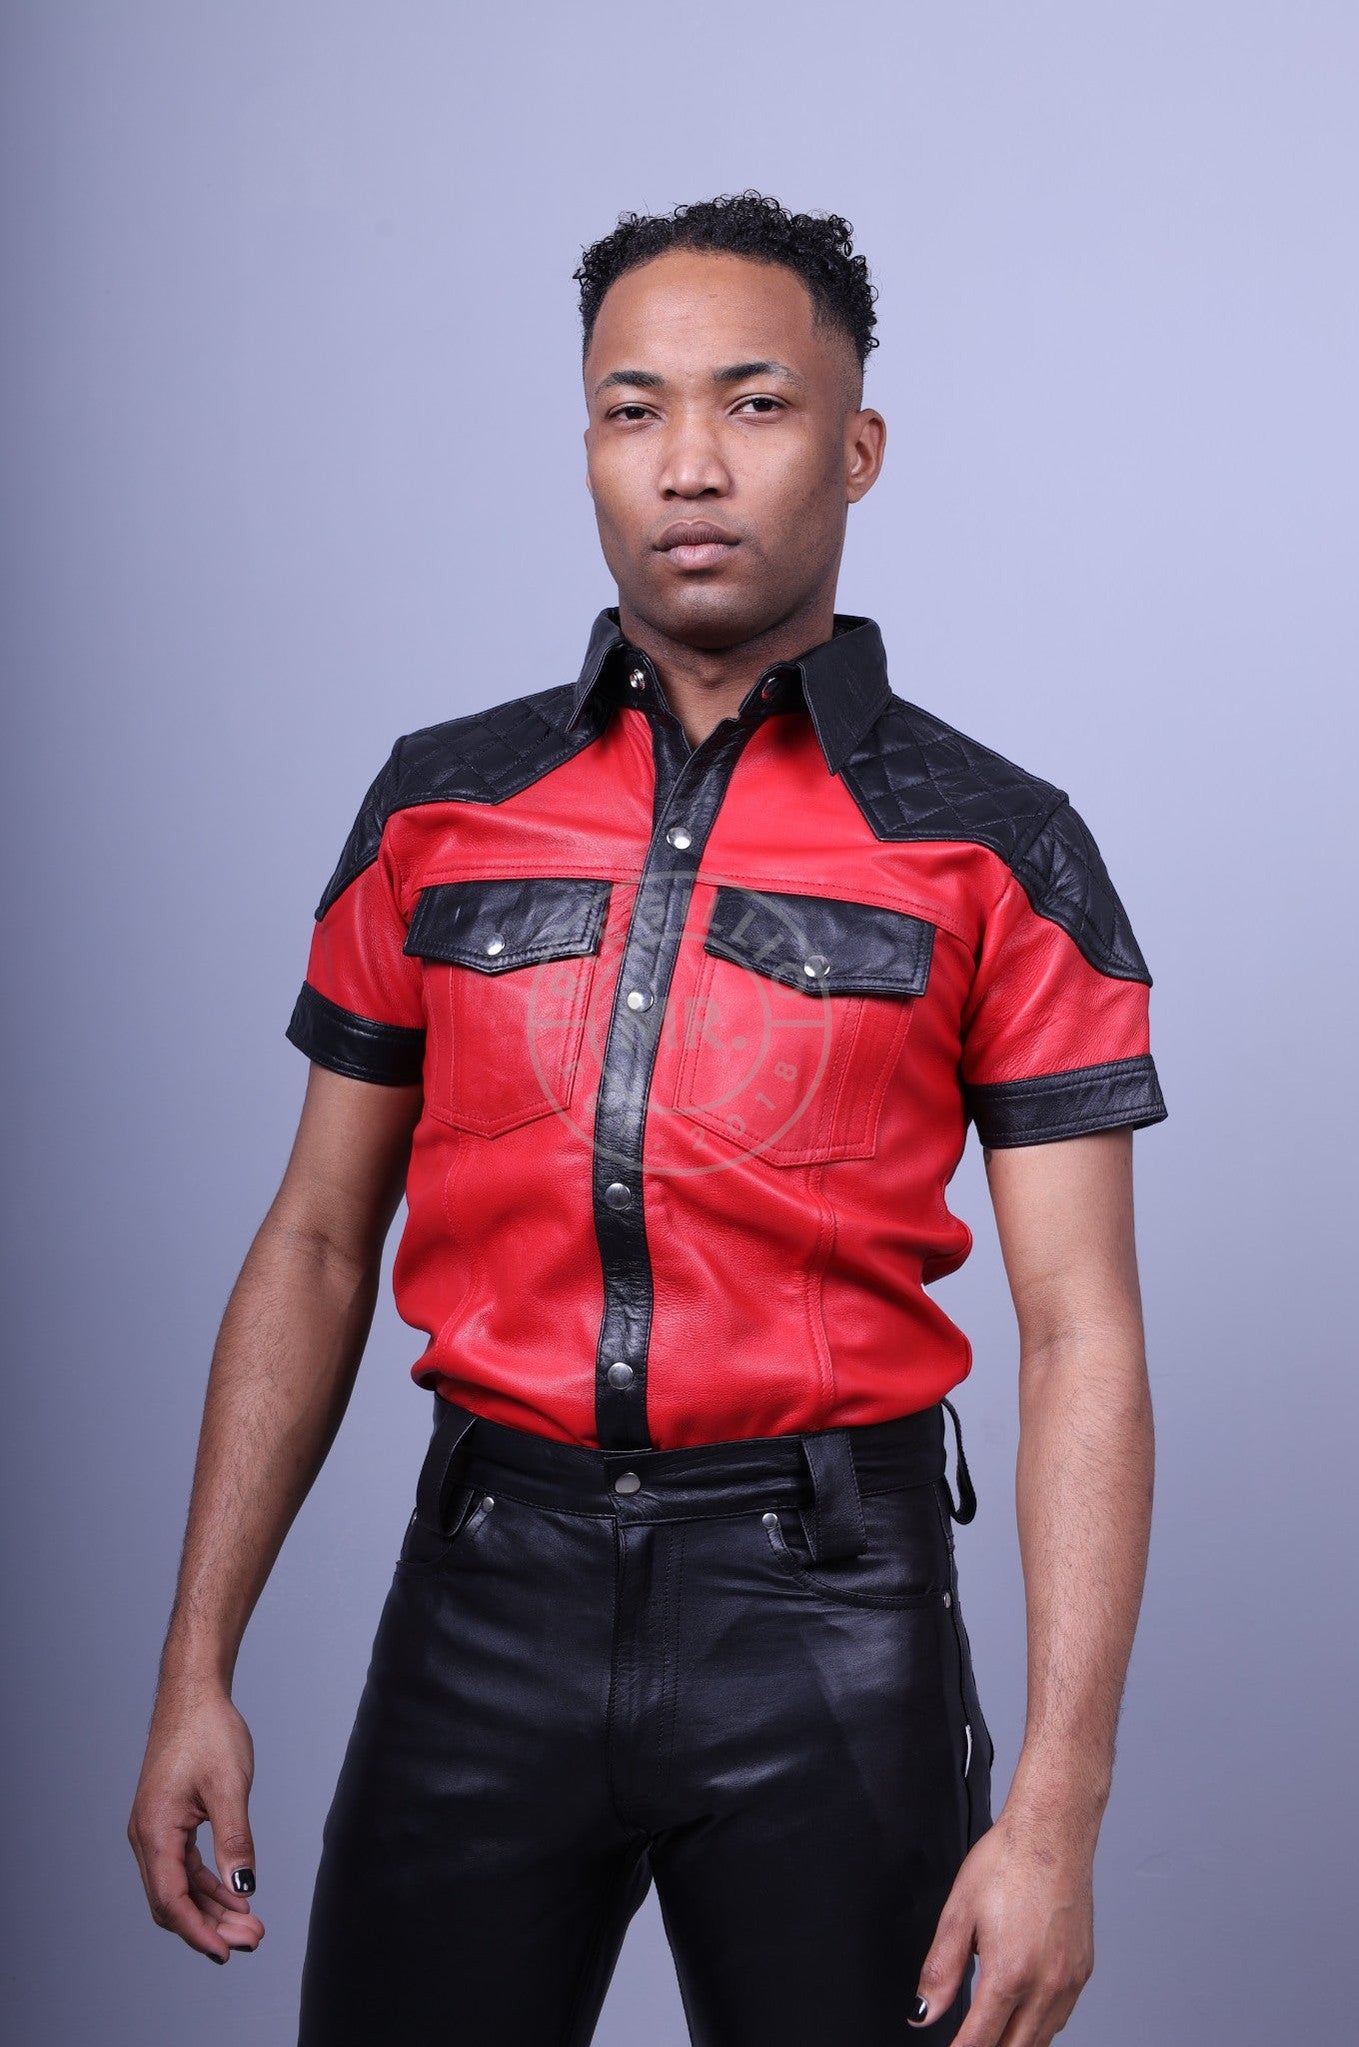 Red Leather Shirt with Black Padding at MR. Riegillio